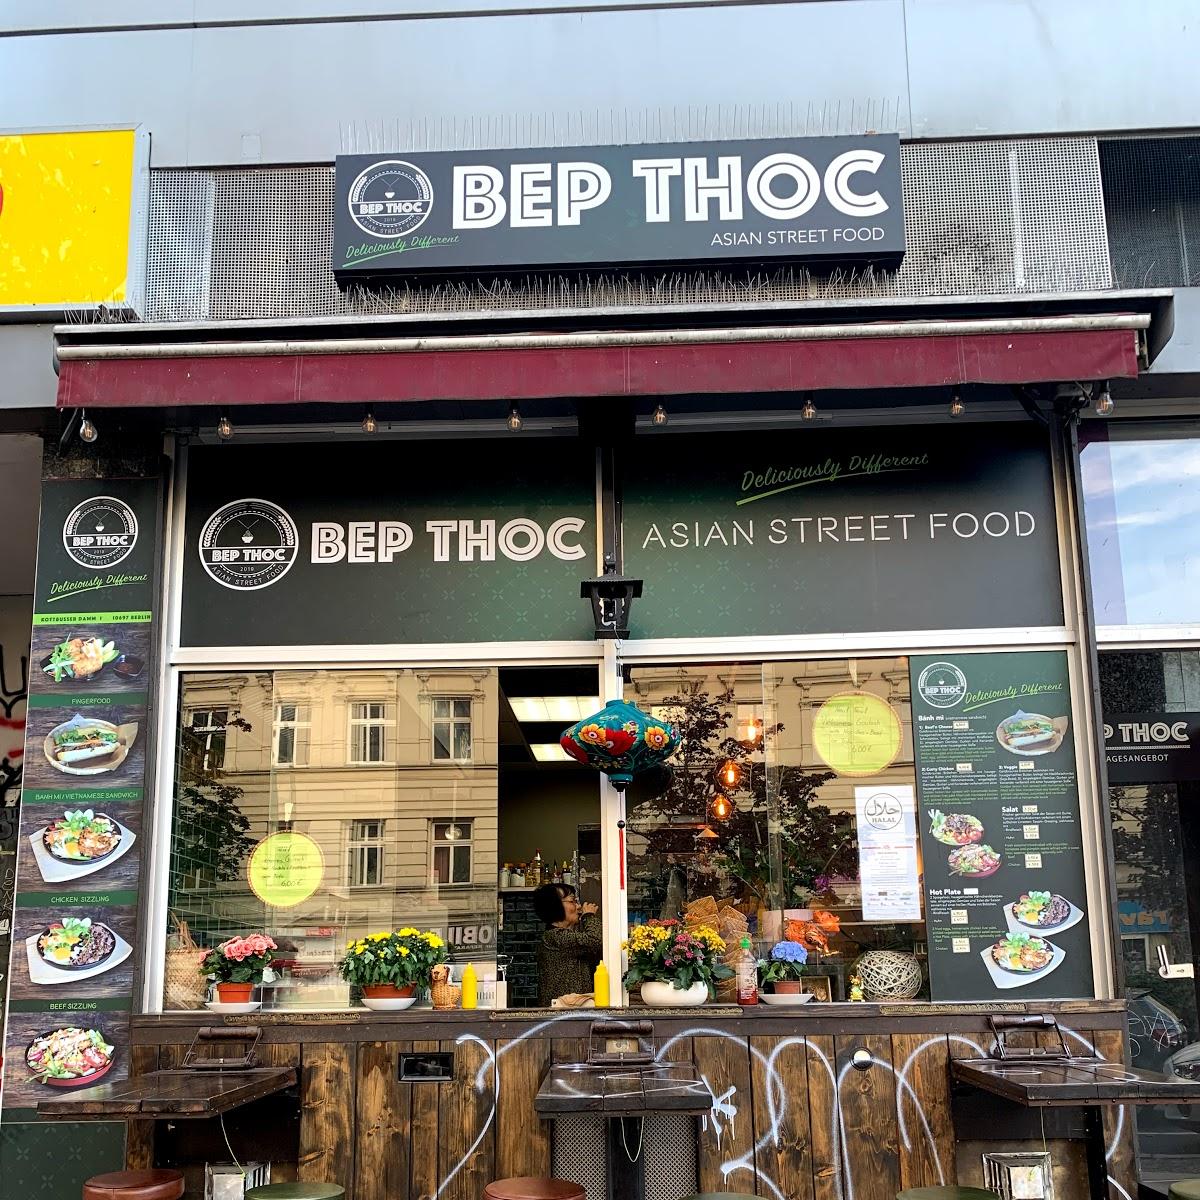 Restaurant "Bep Thoc - Asian Street Food" in Berlin